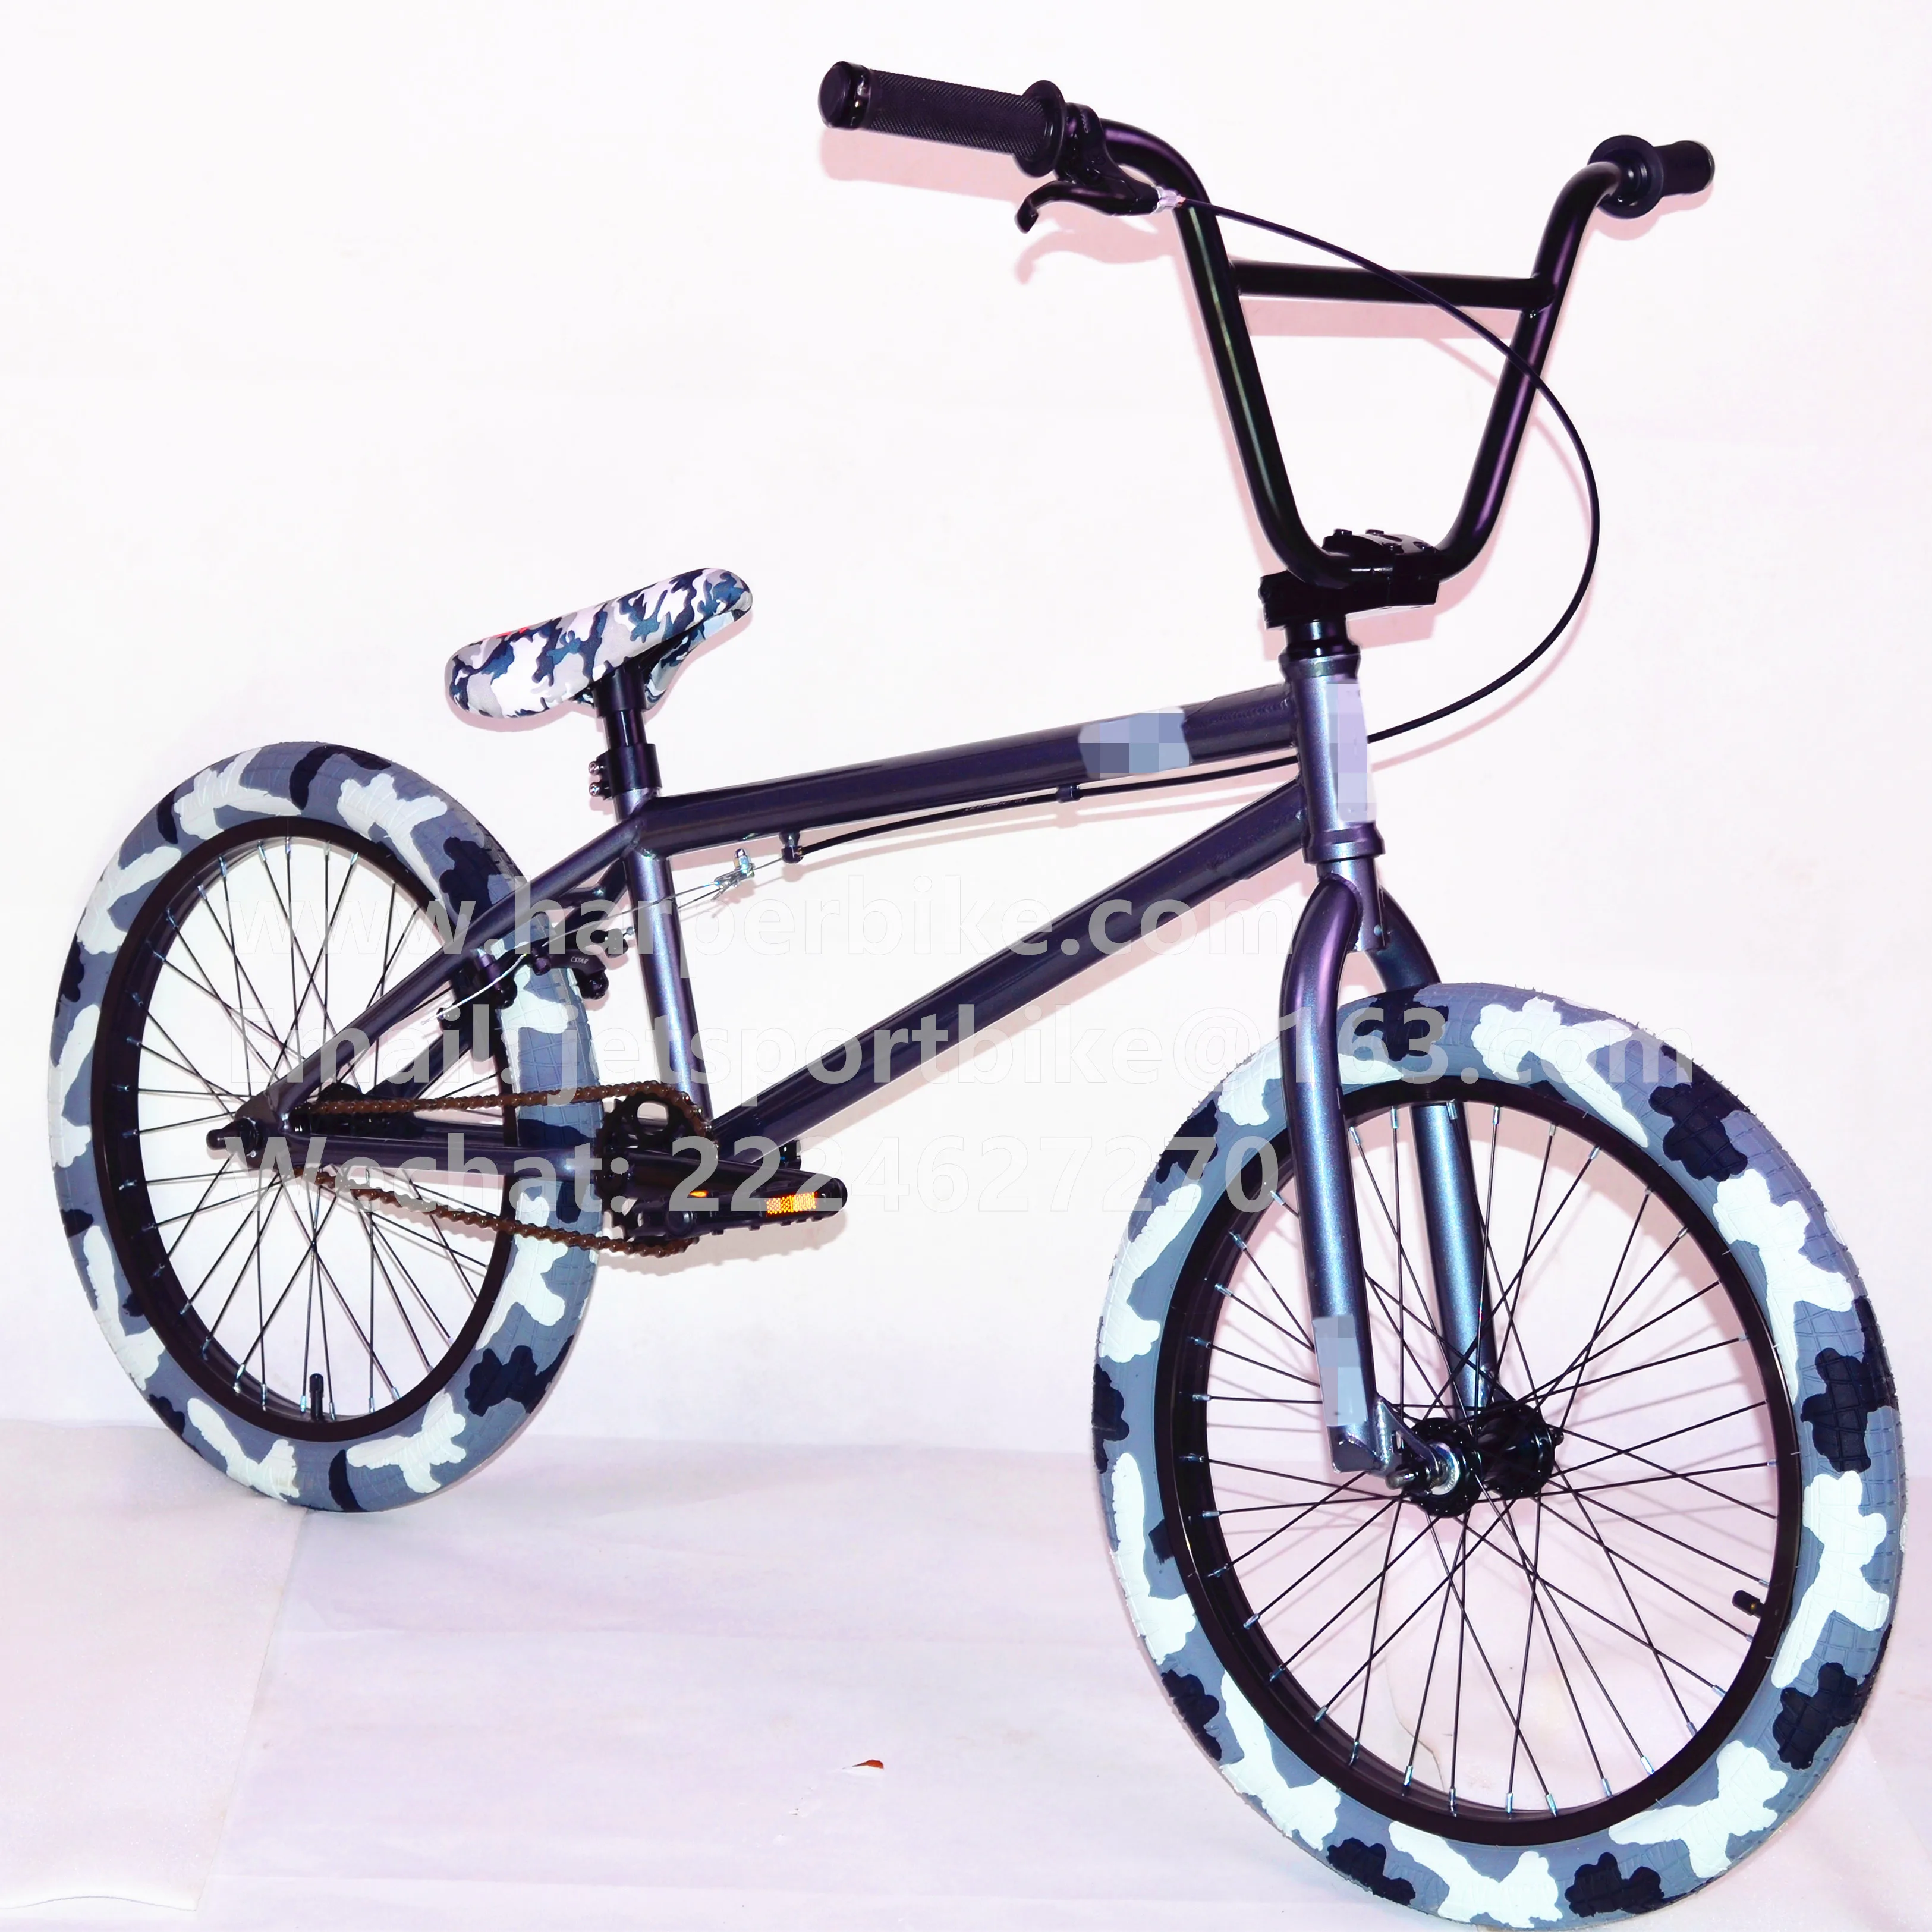 custom bmx bikes for sale